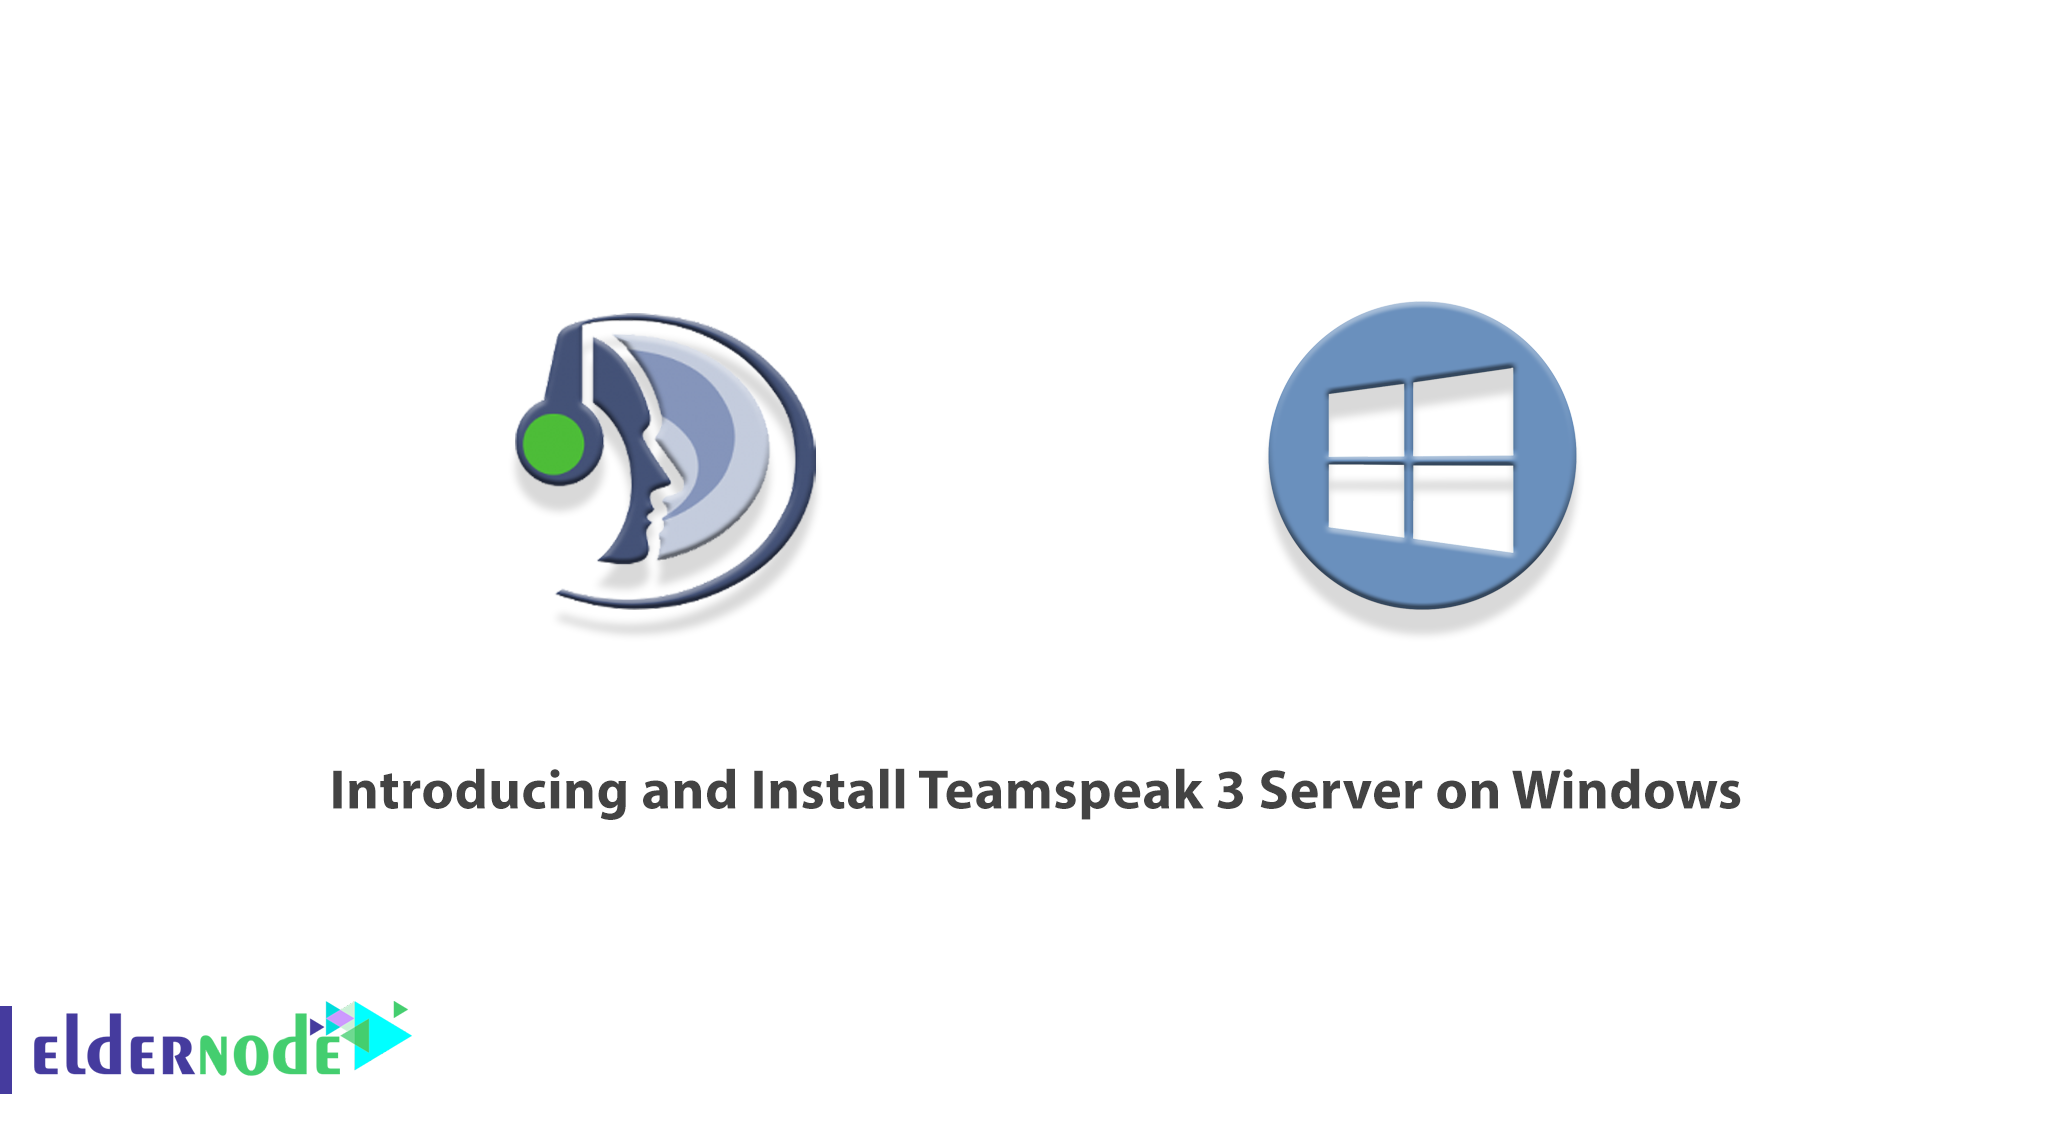 Introducing and Install Teamspeak 3 Server on Windows